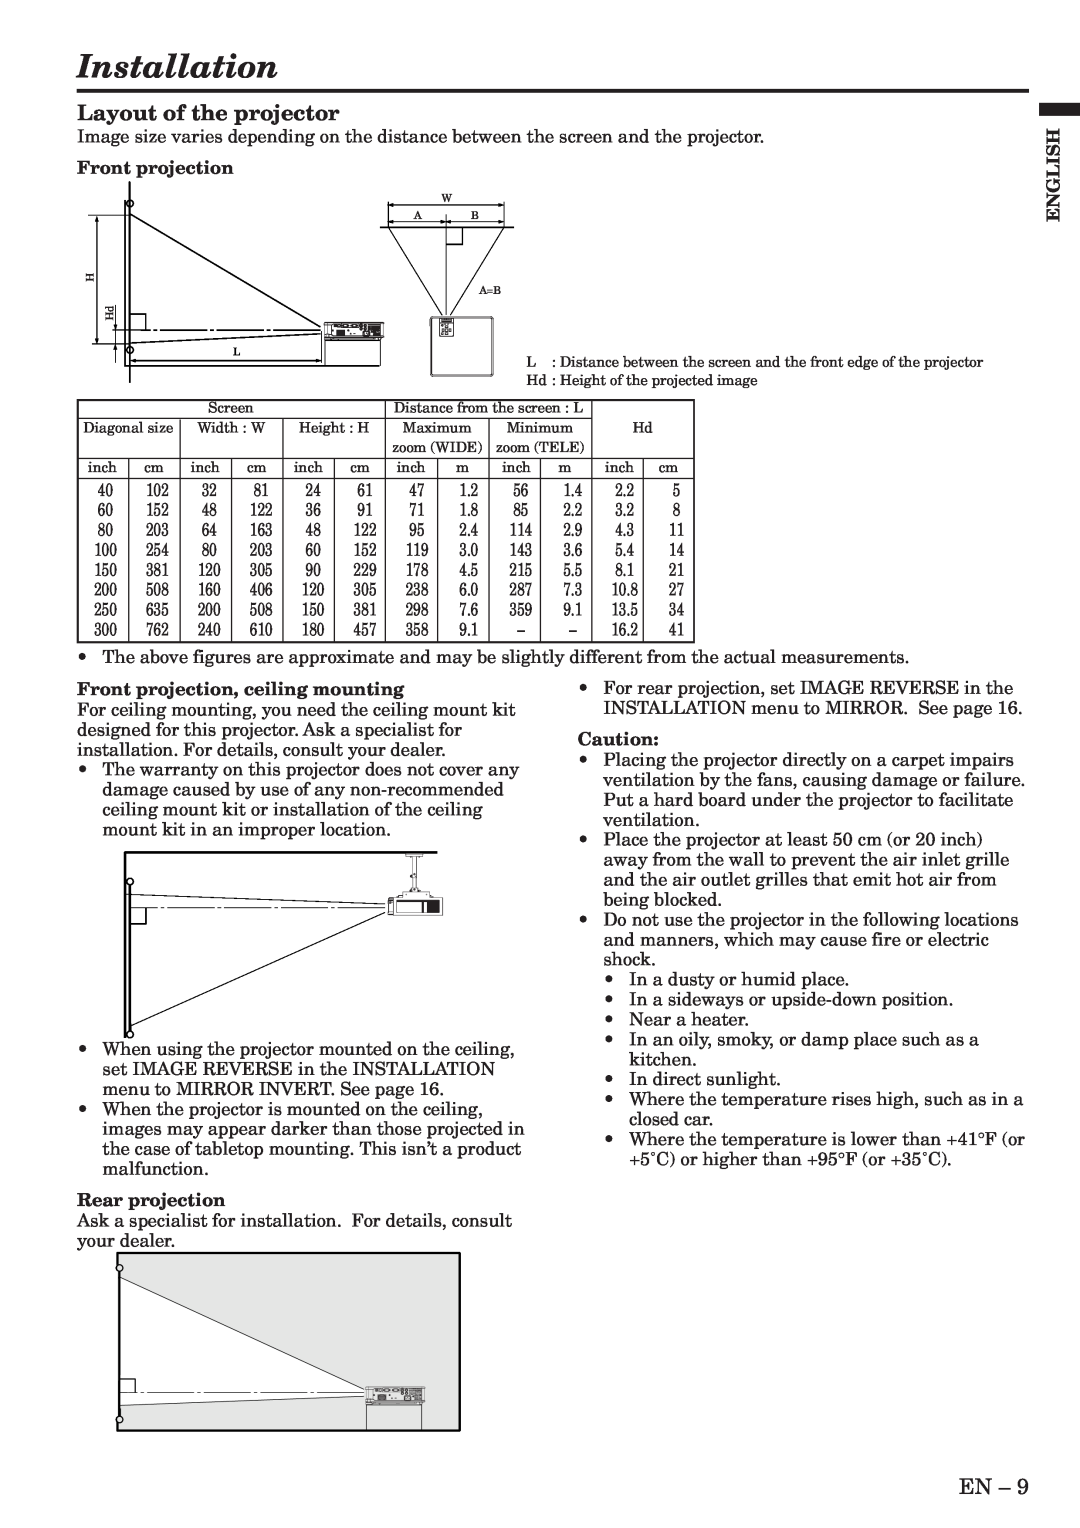 Mitsubishi Electronics XL6U user manual Installation, Layout of the projector 